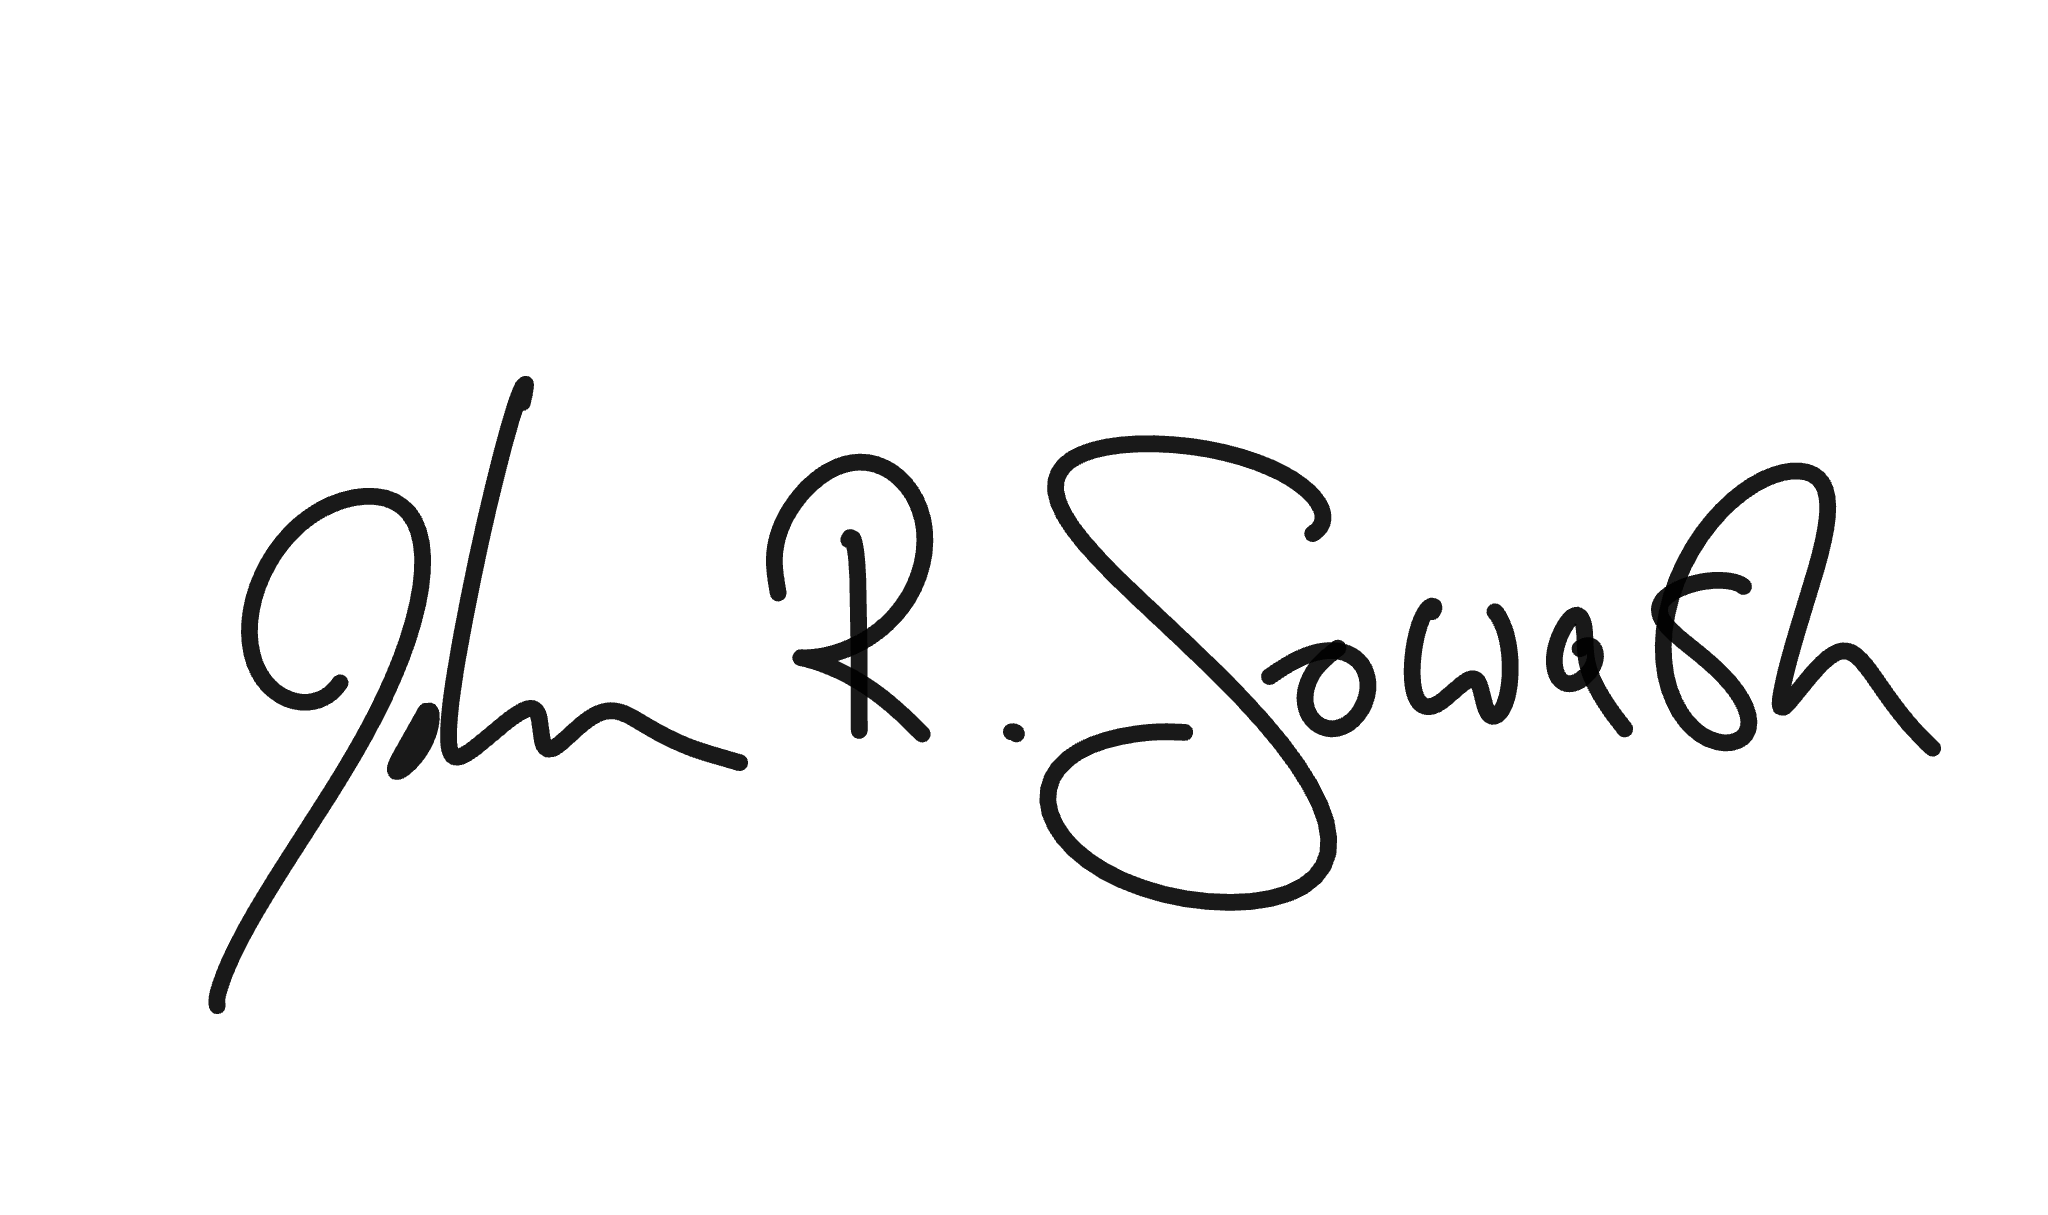 Signature: John R Sowash